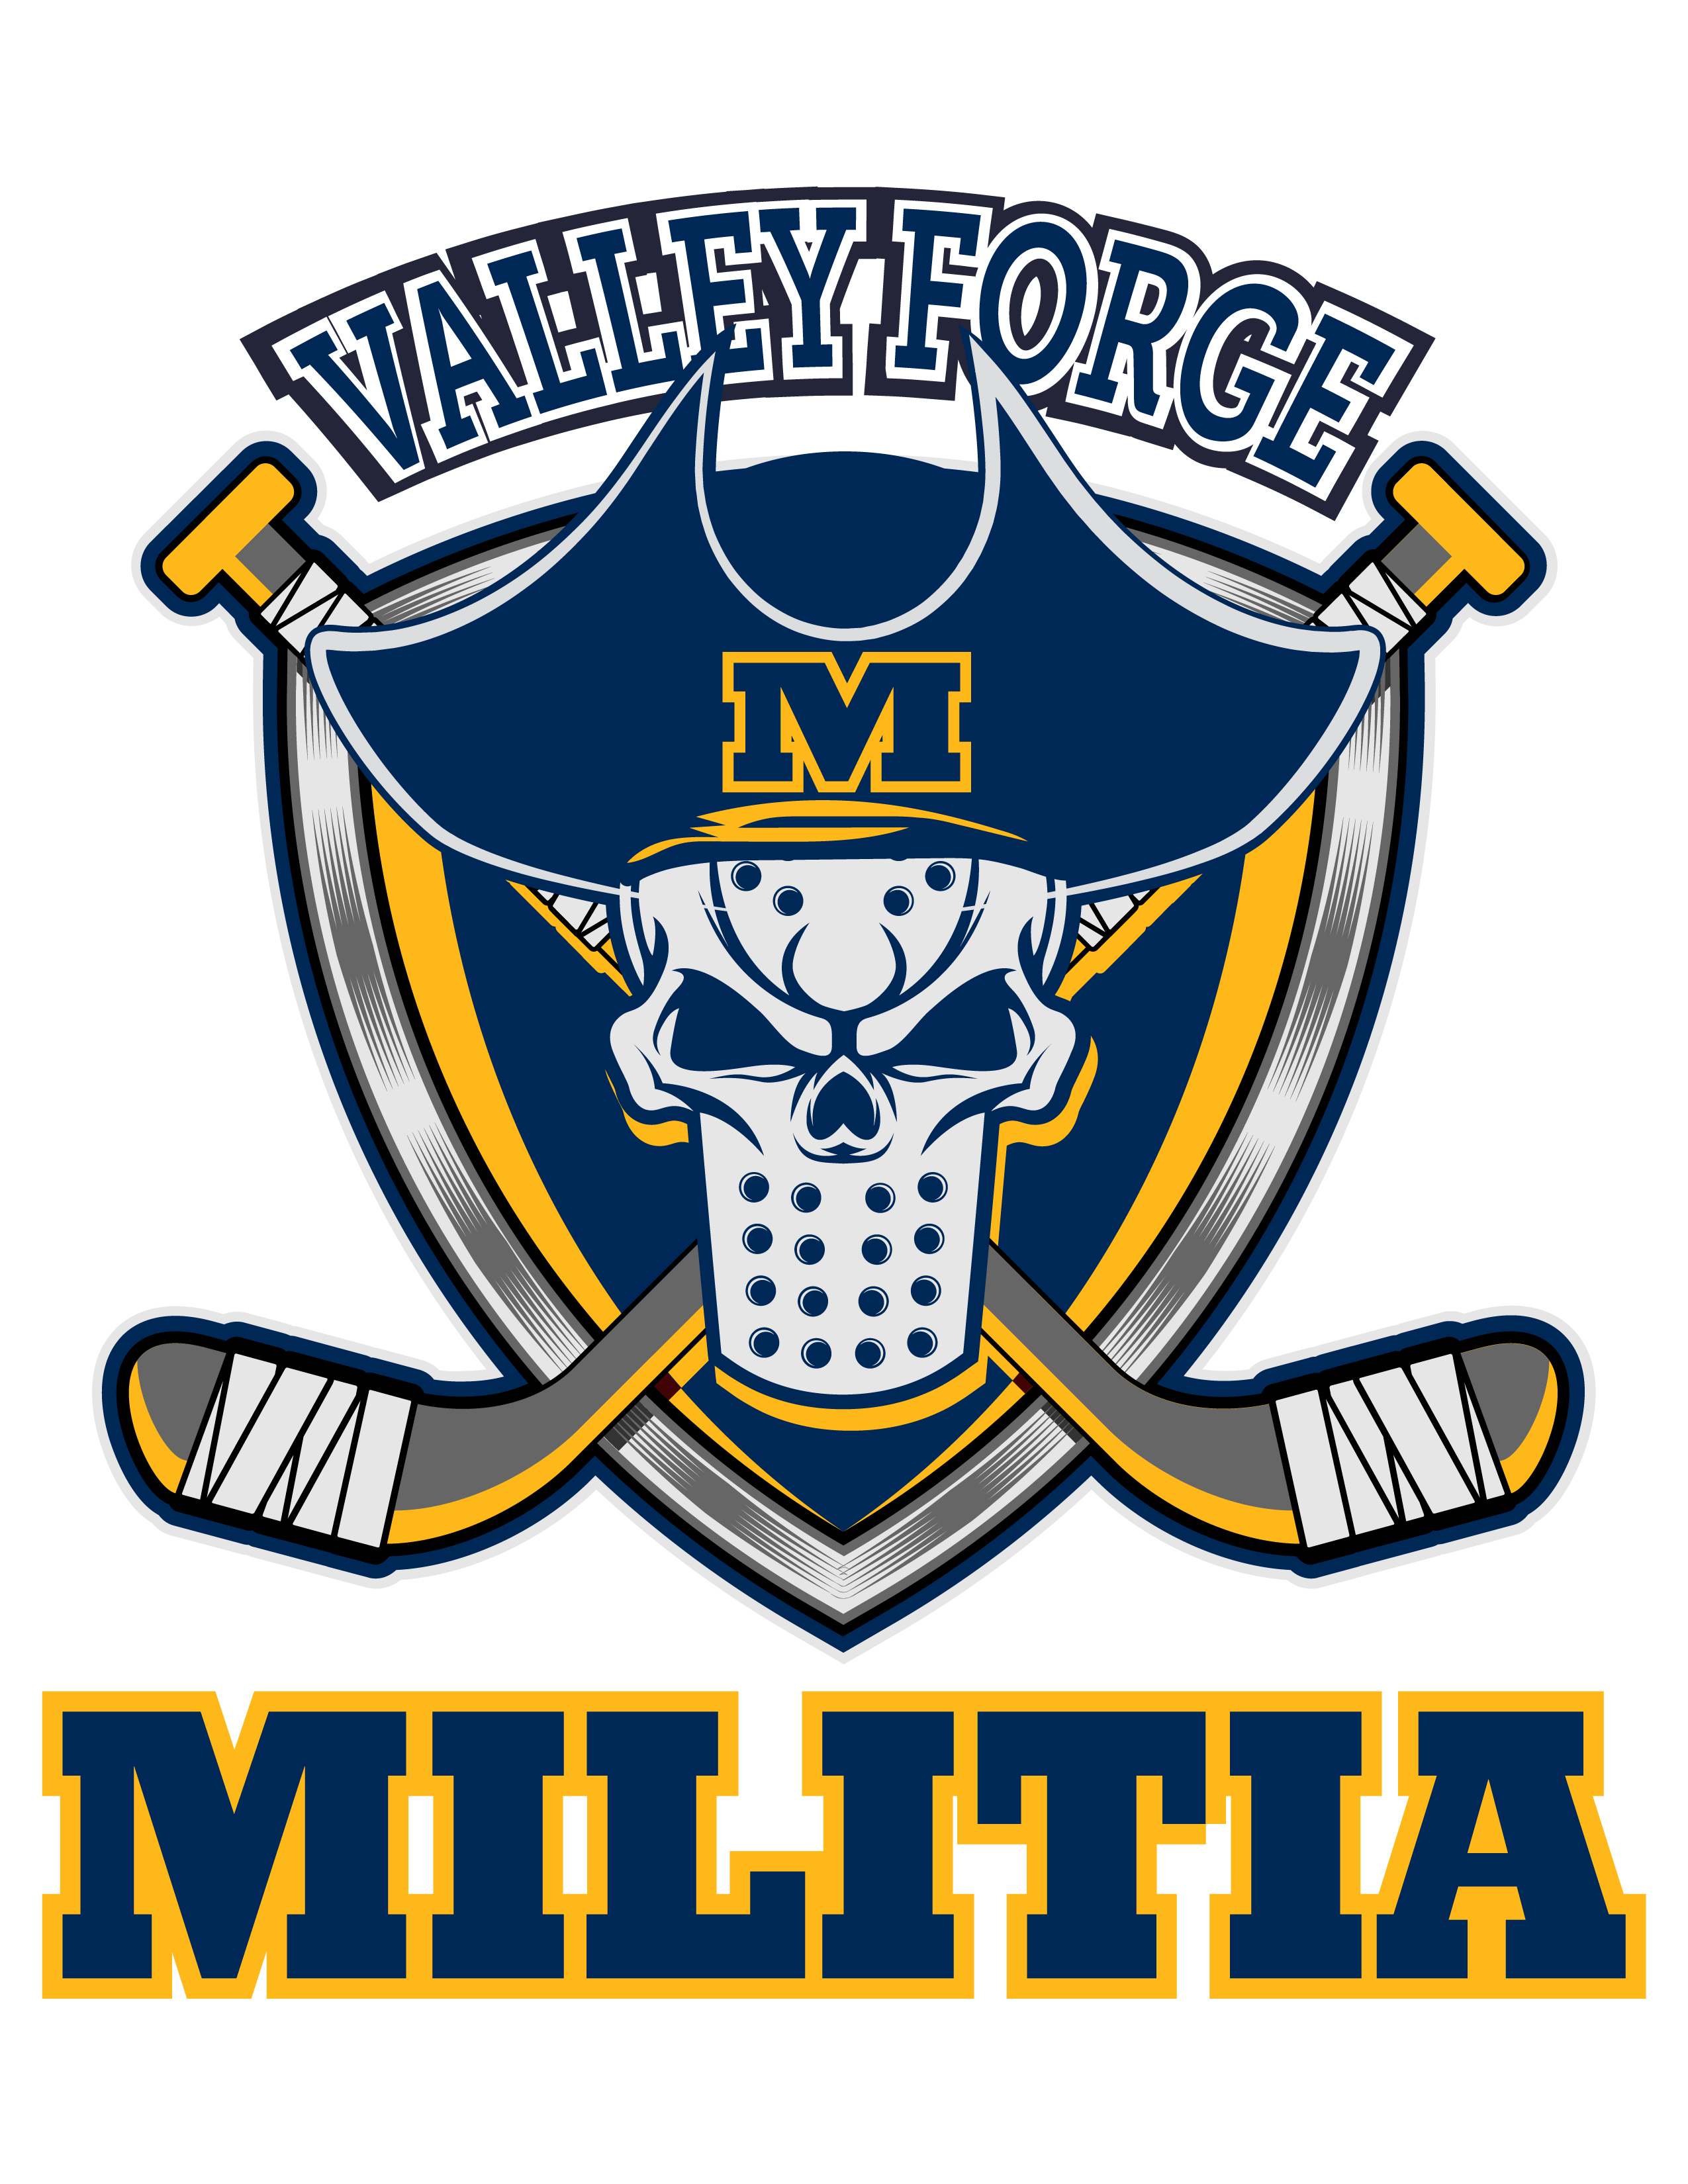 Valley Forge Militia